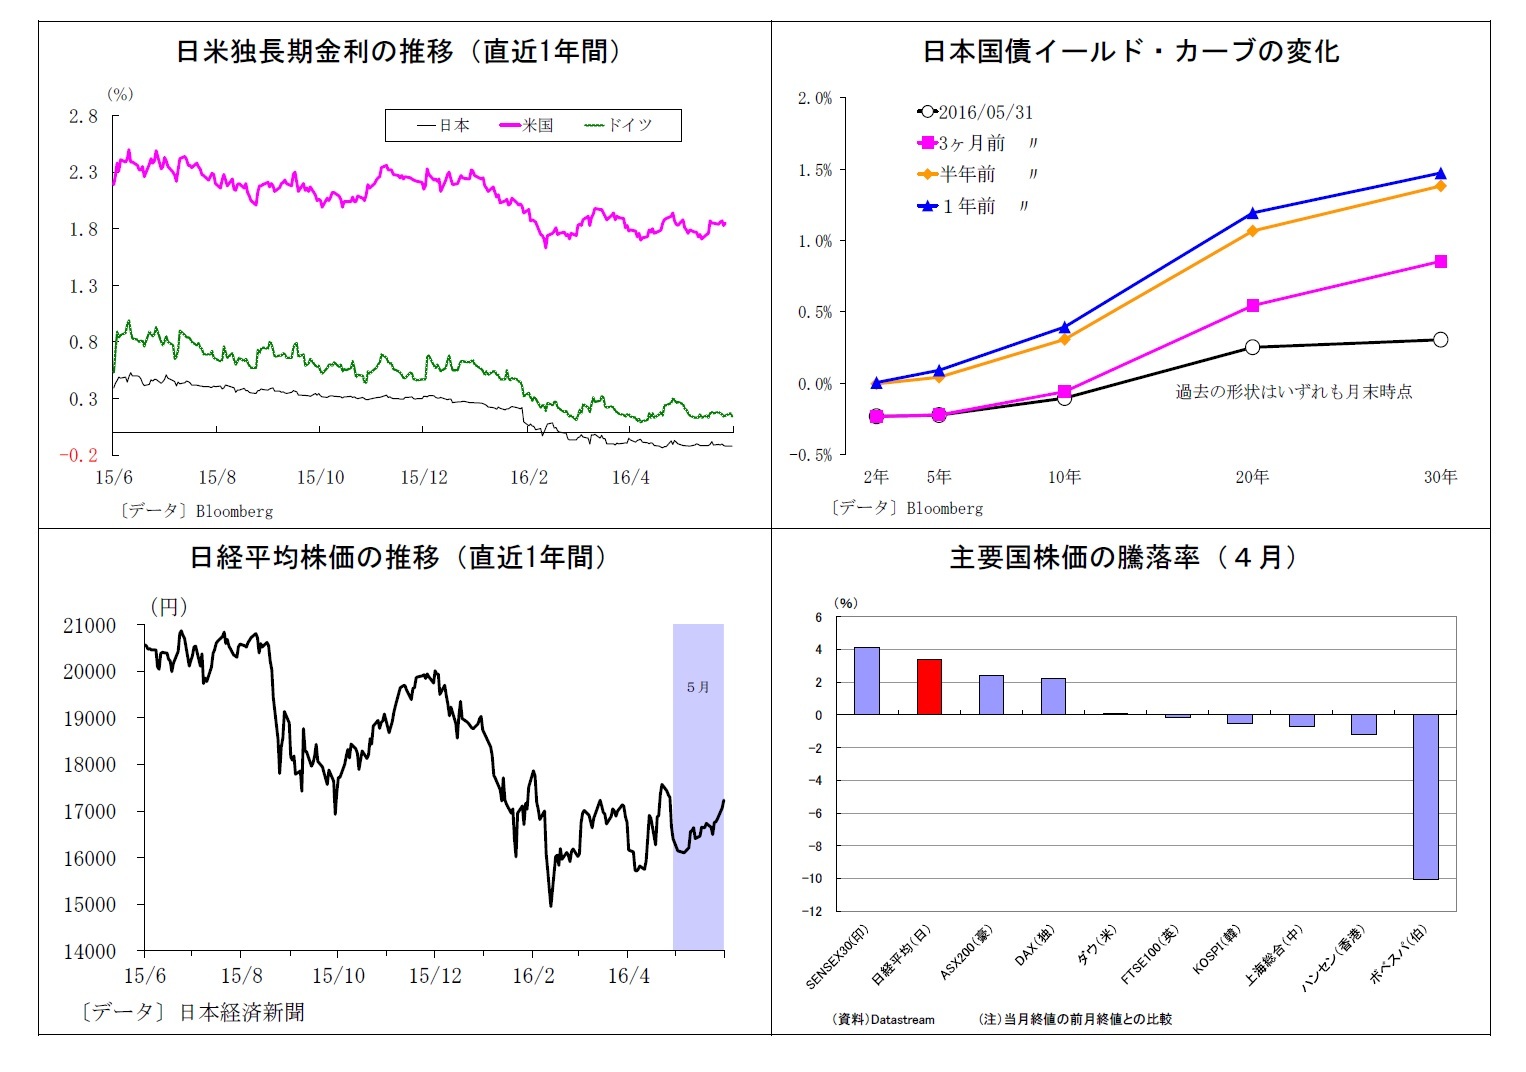 日米独長期金利の推移（直近1年間）/日本国債イールド・カーブの変化/日経平均株価の推移（直近1年間）/主要国株価の騰落率（４月）